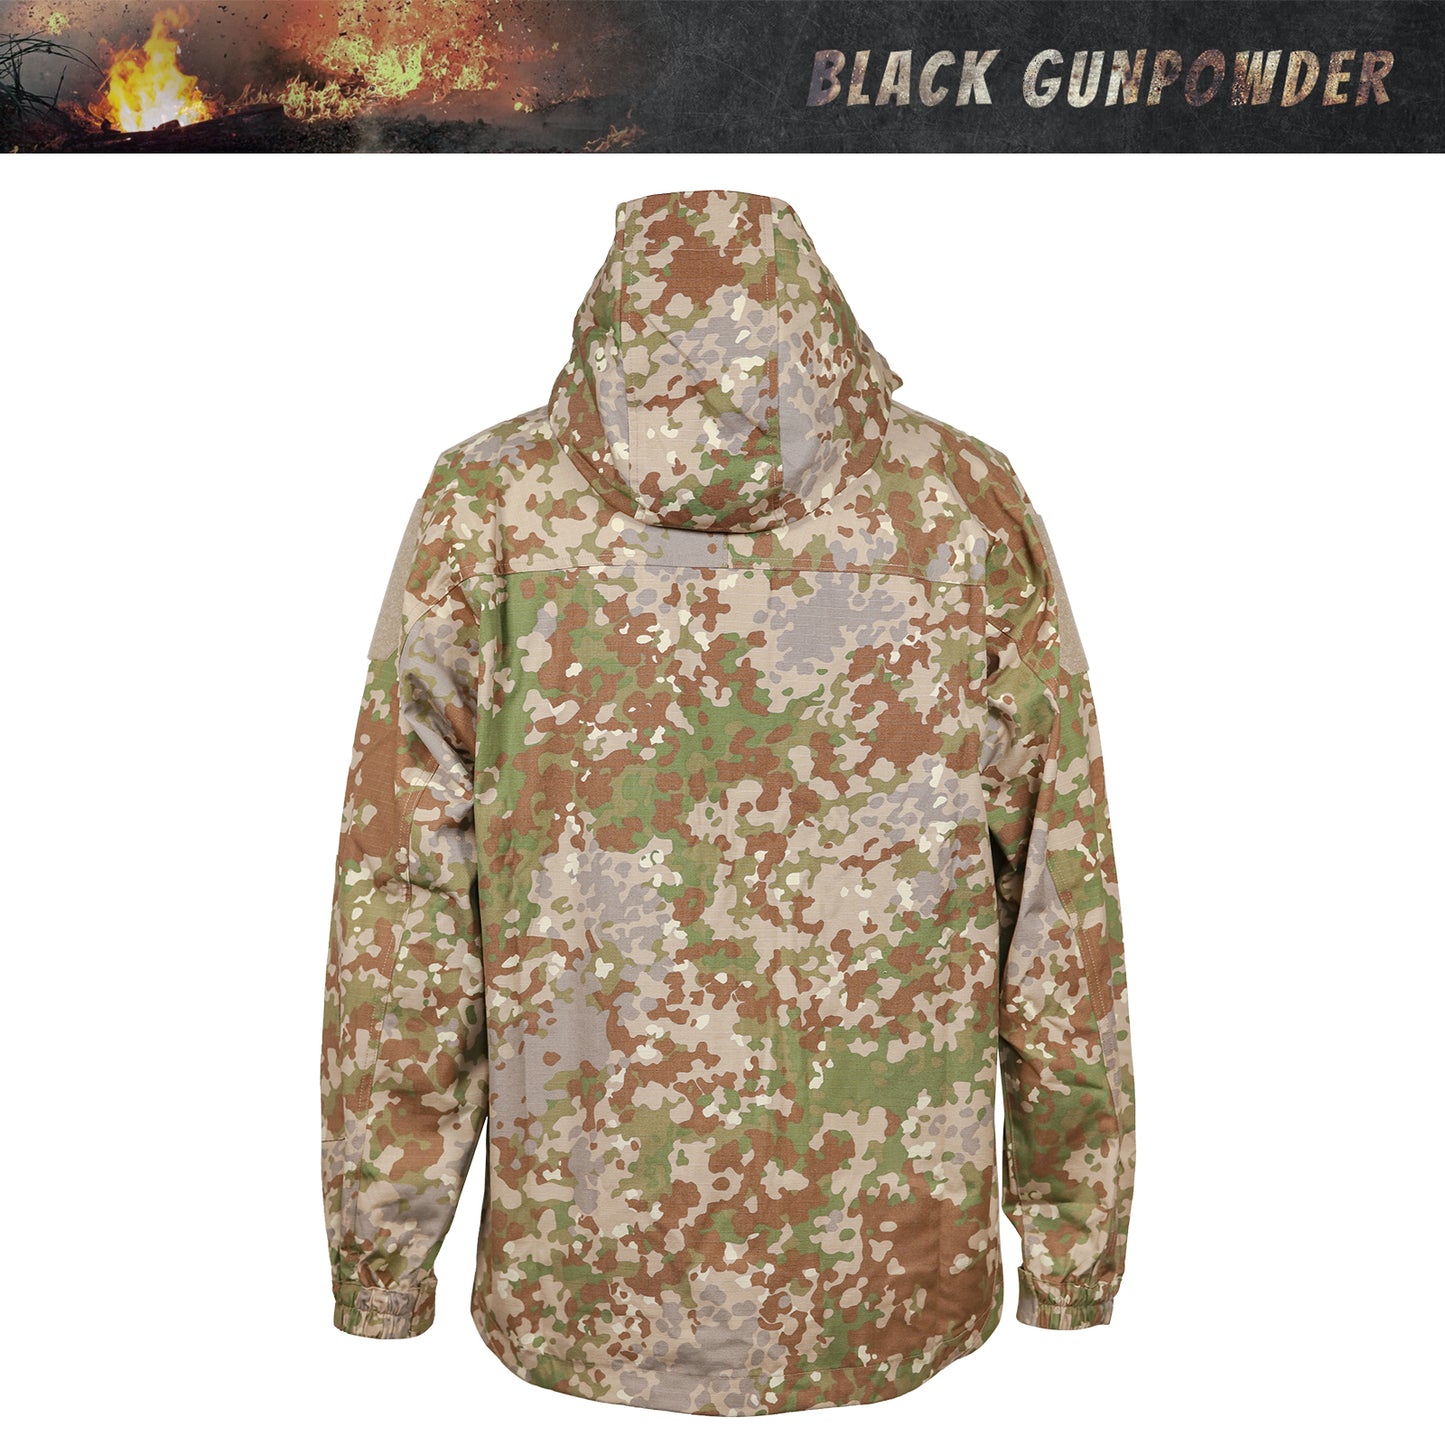 Black Gunpowder Men's Tactical Hooded Jacket Airsoft Hunting Paintball Flecktarn Camo